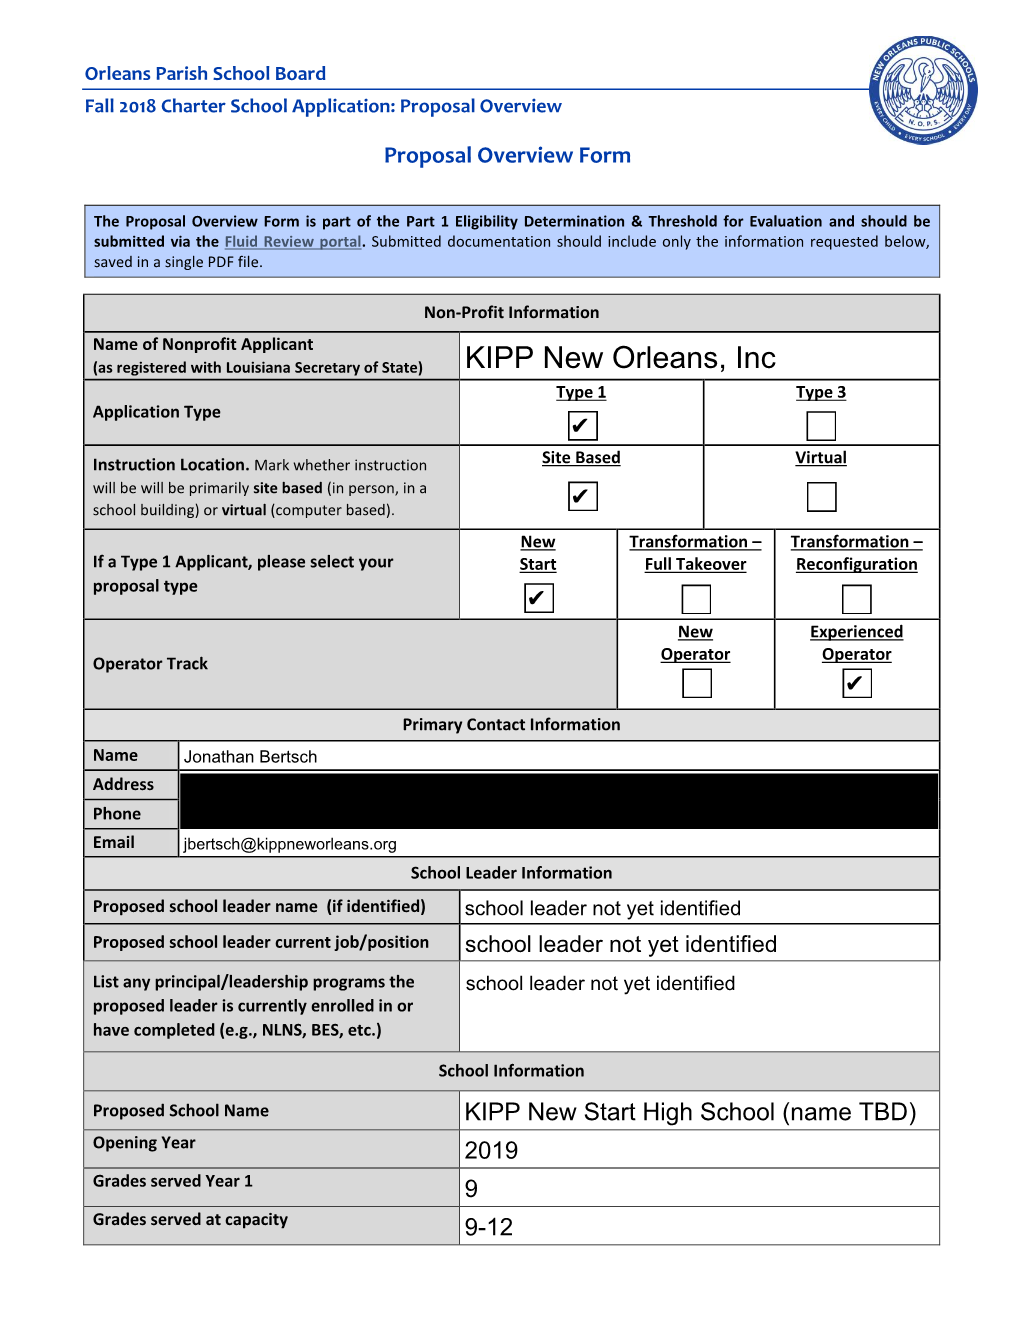 KIPP New Orleans, Inc